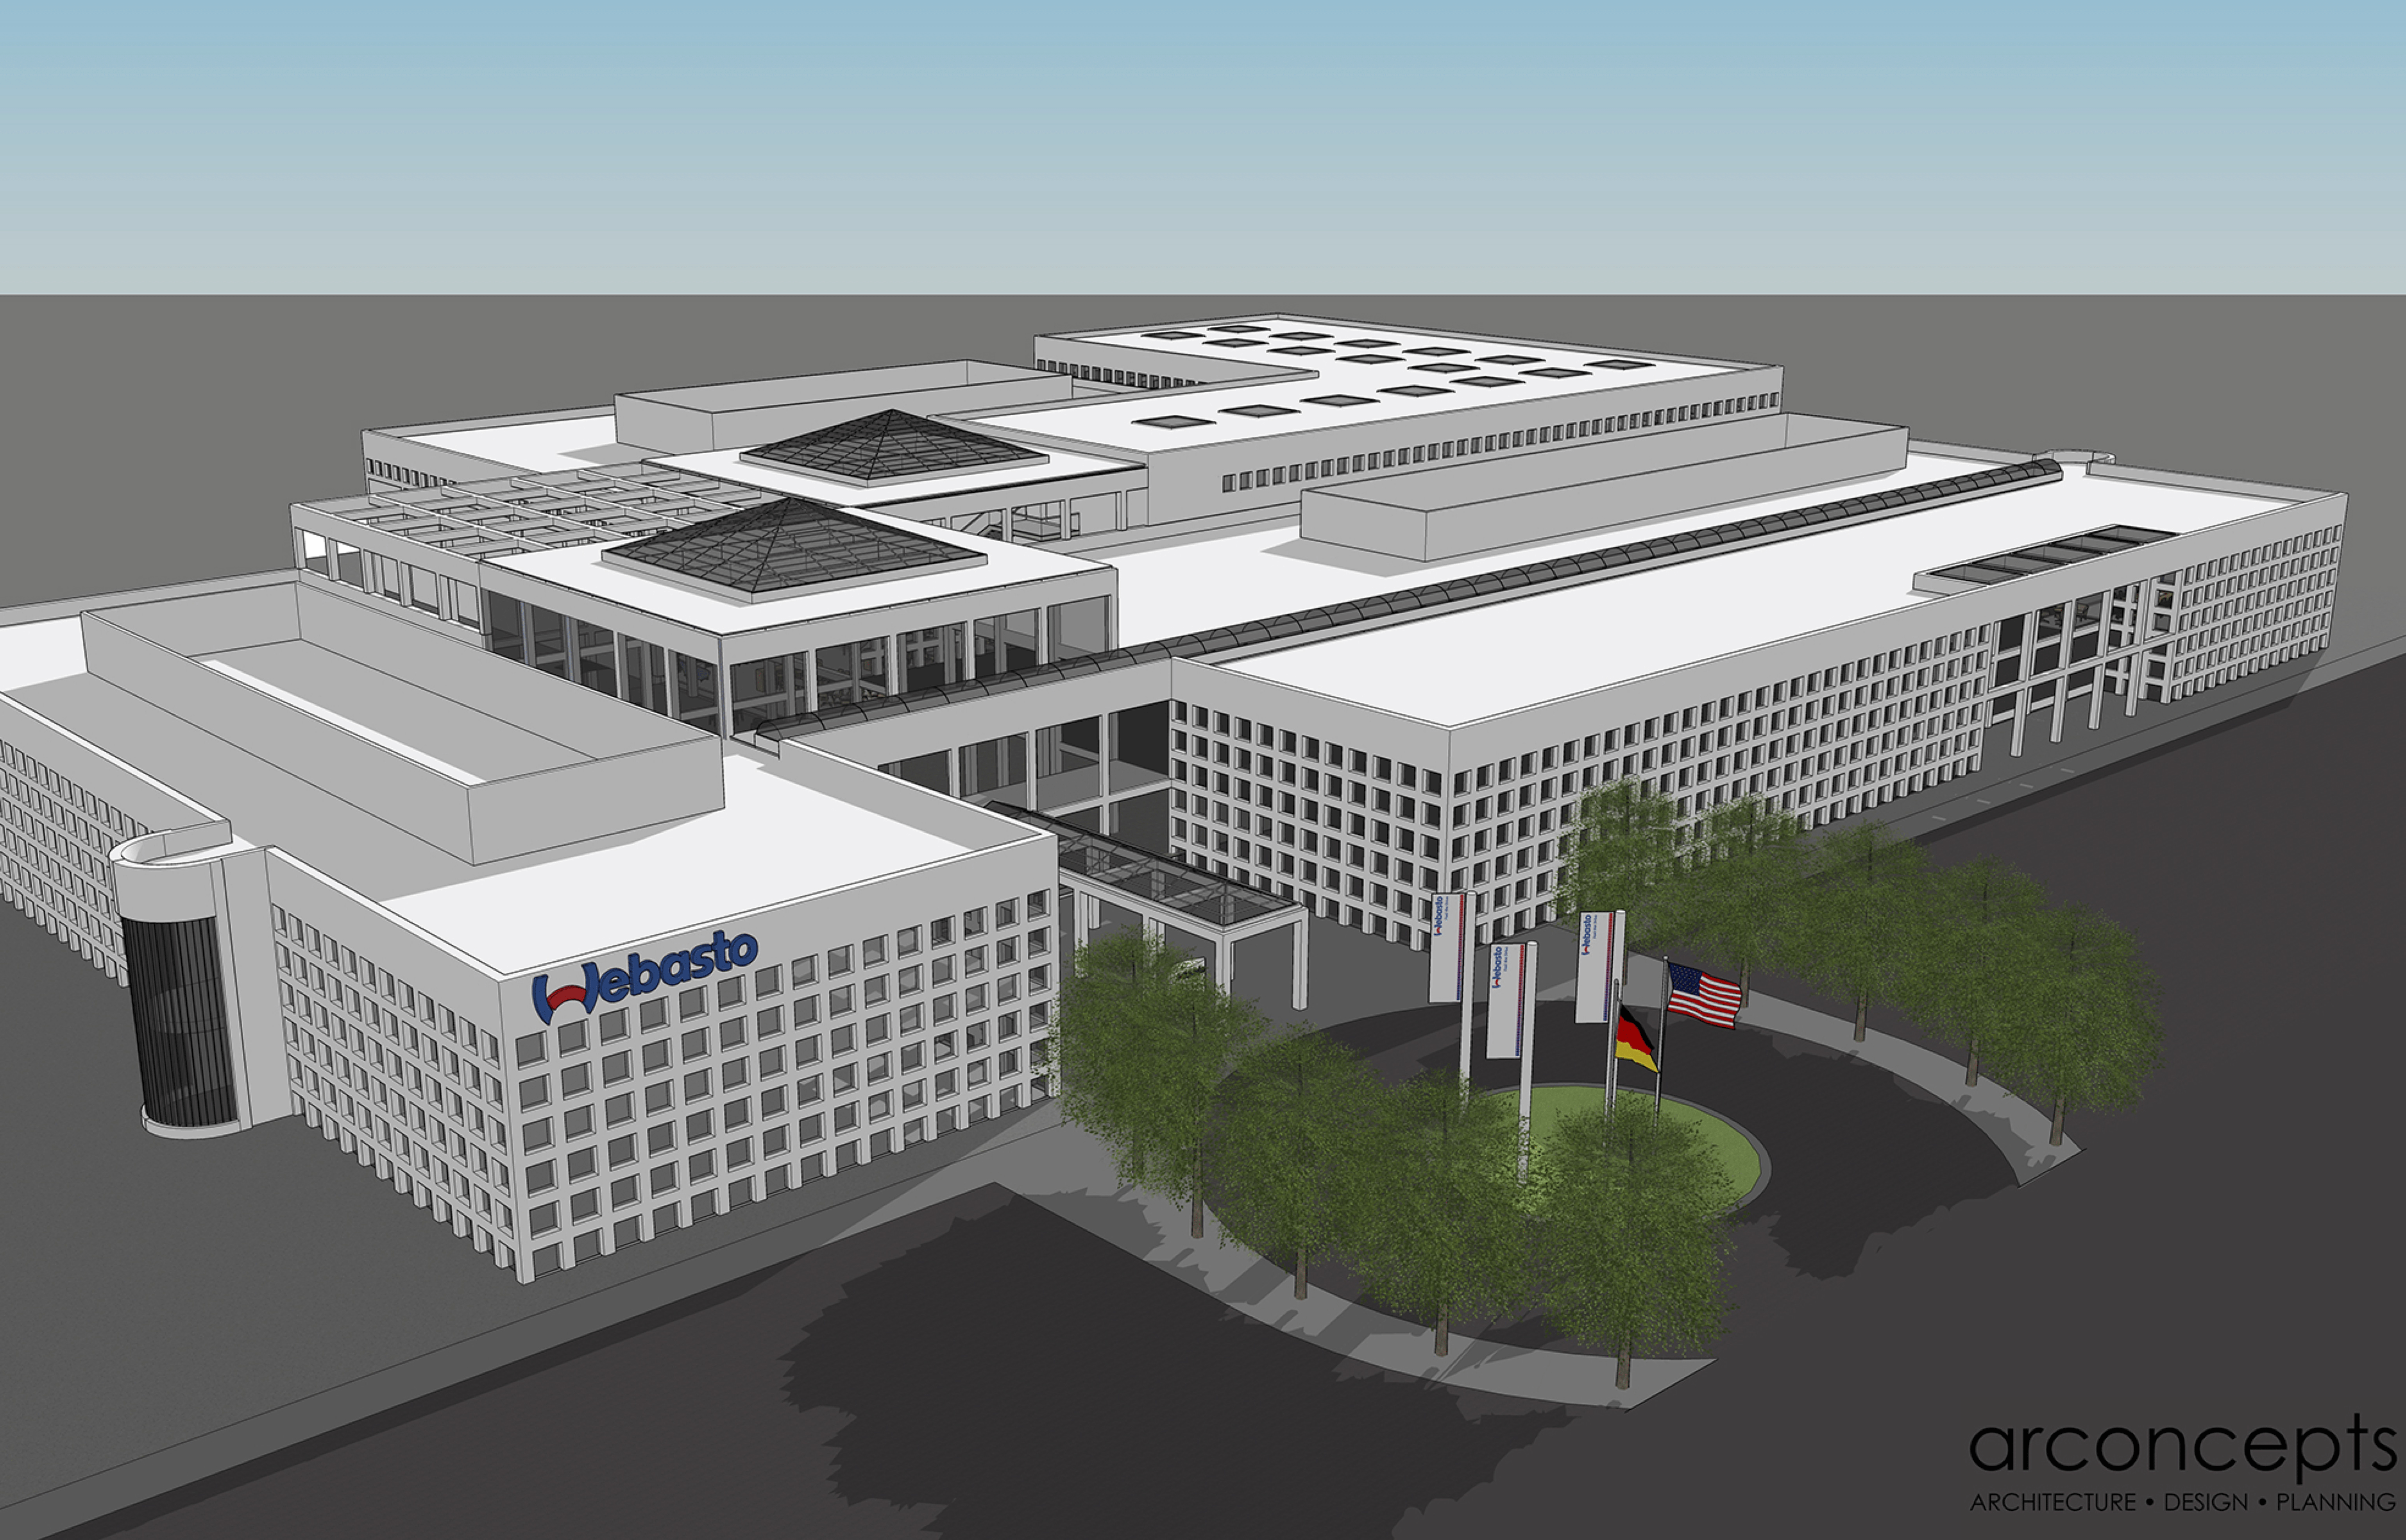 KIRCO MANIX to Construct Webasto’s New Americas Headquarters in Auburn Hills, Mich.